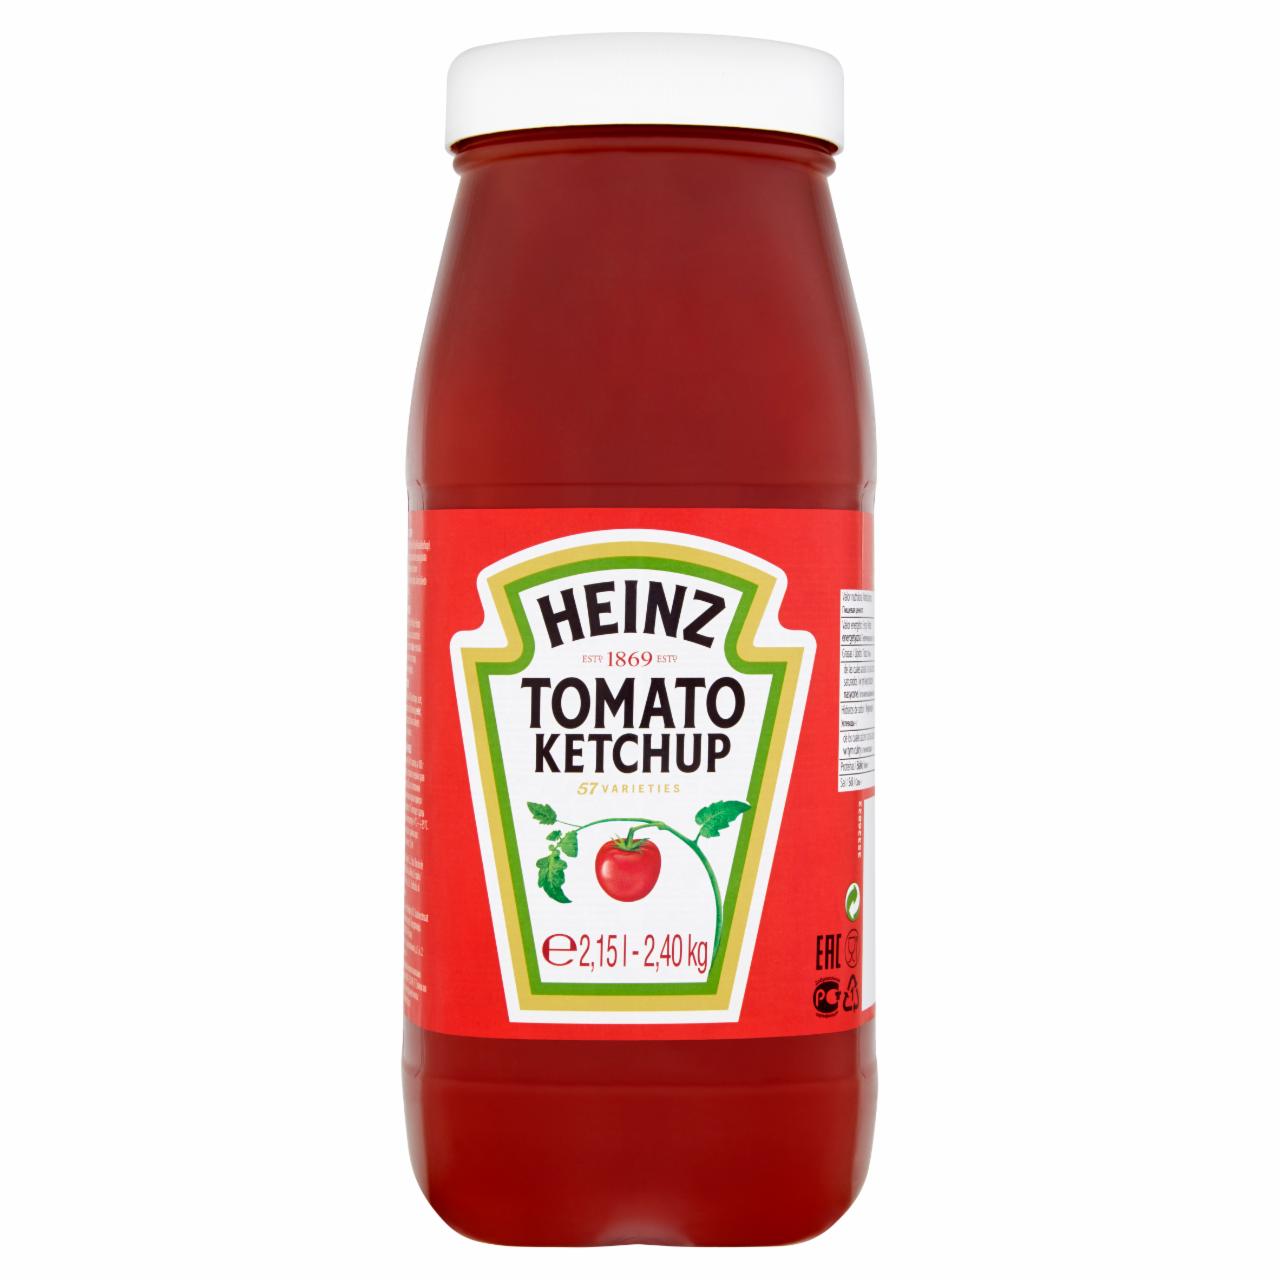 Zdjęcia - Heinz Ketchup łagodny 2,40 kg